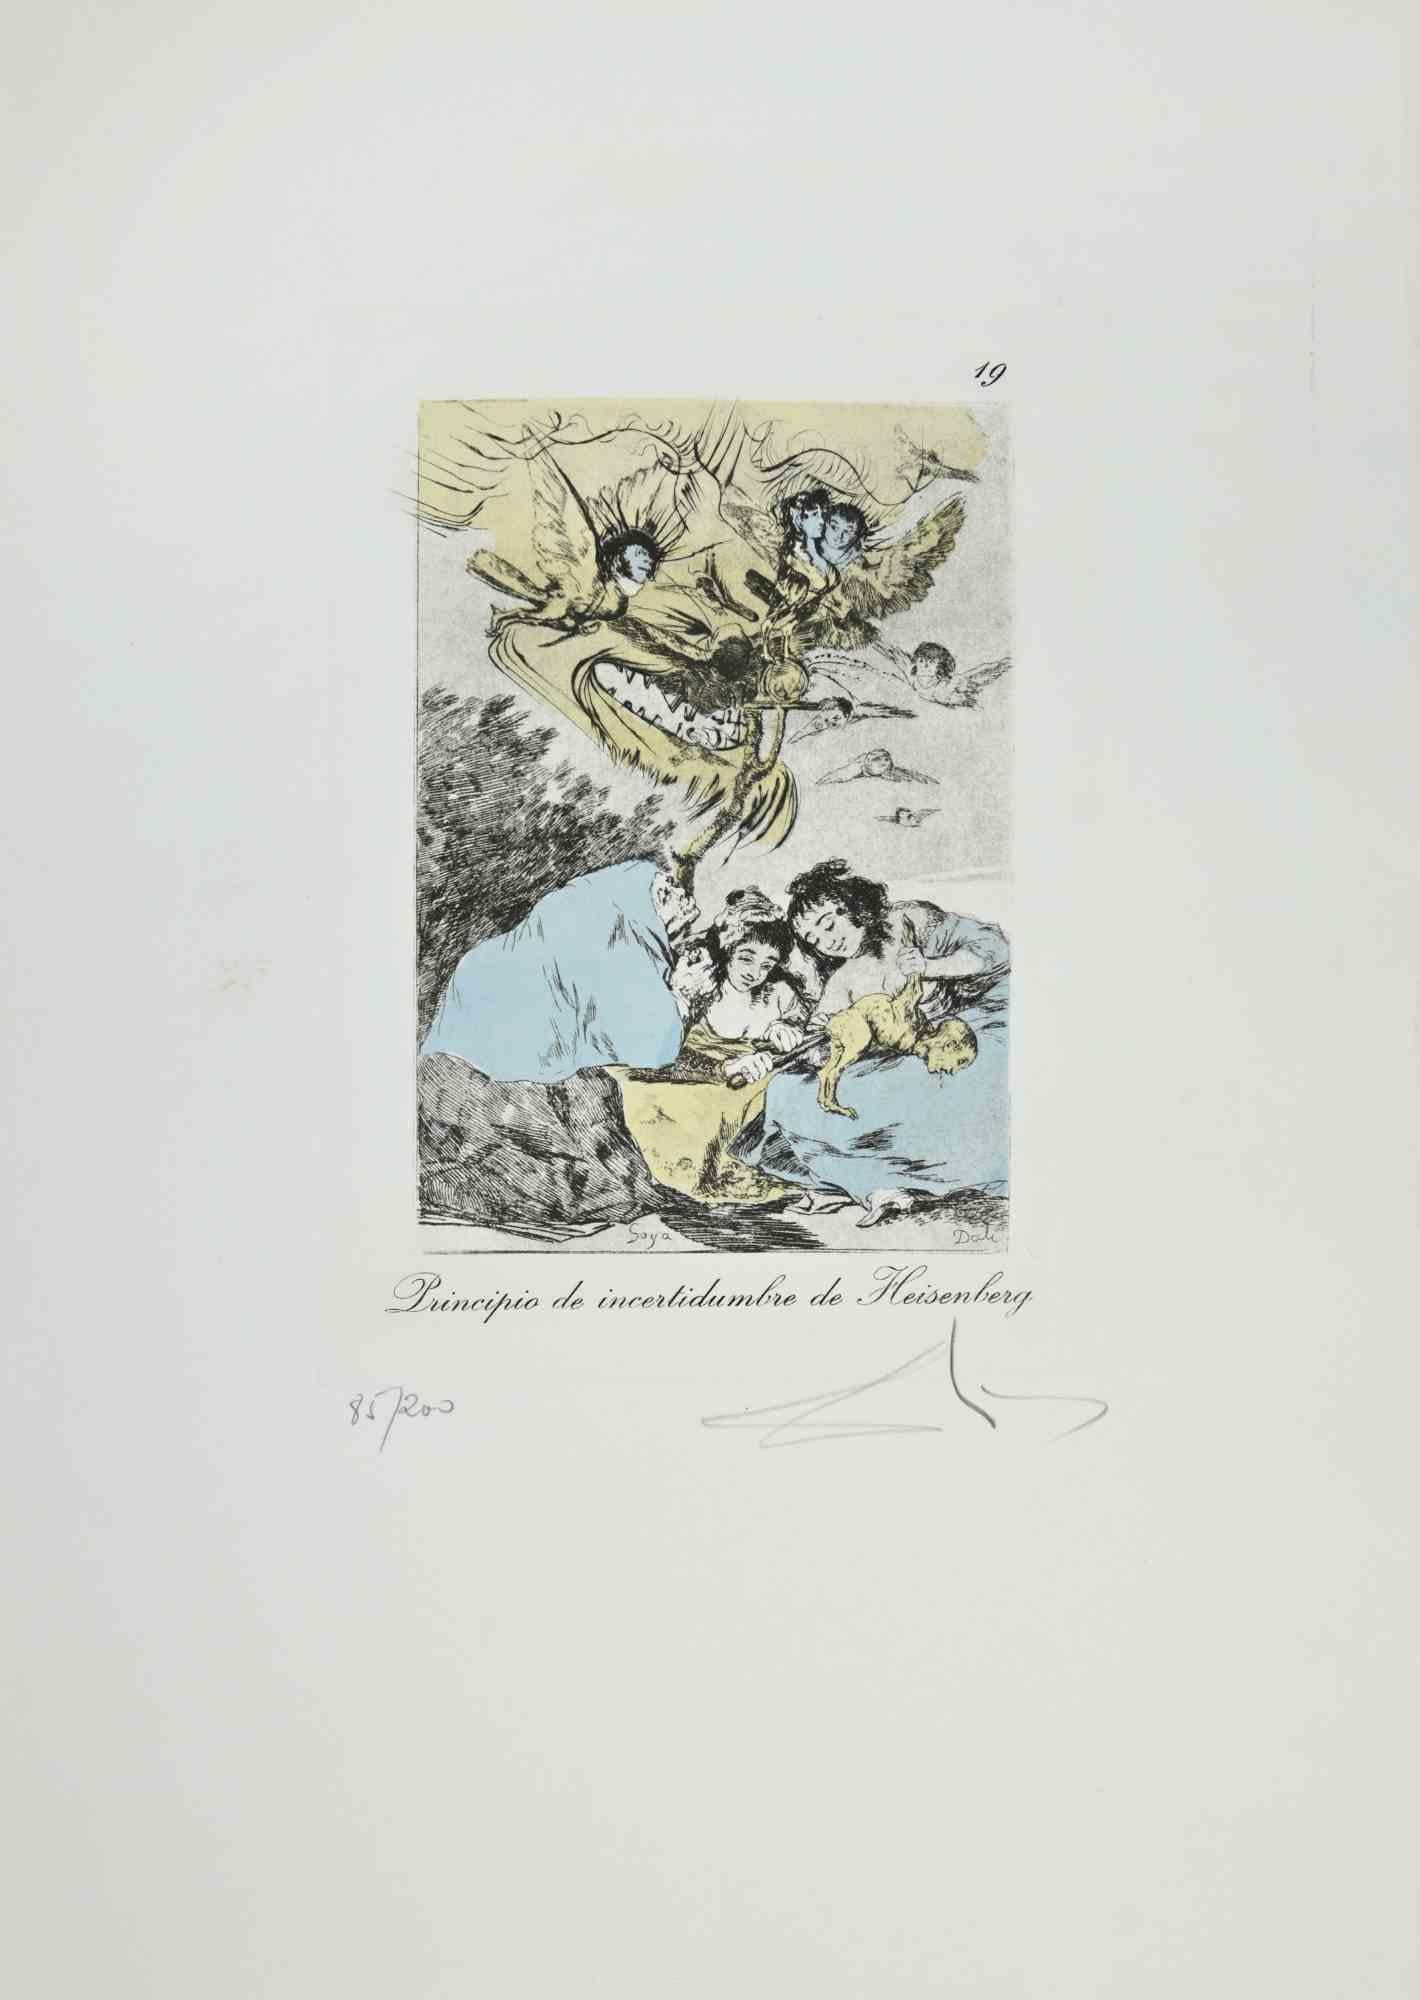 Salvador Dalì and Francisco Goya Figurative Print – Principio de Incertidumbre de Heisenberg – Radierung, Kaltnadelradierung und Pochoir  - 1977